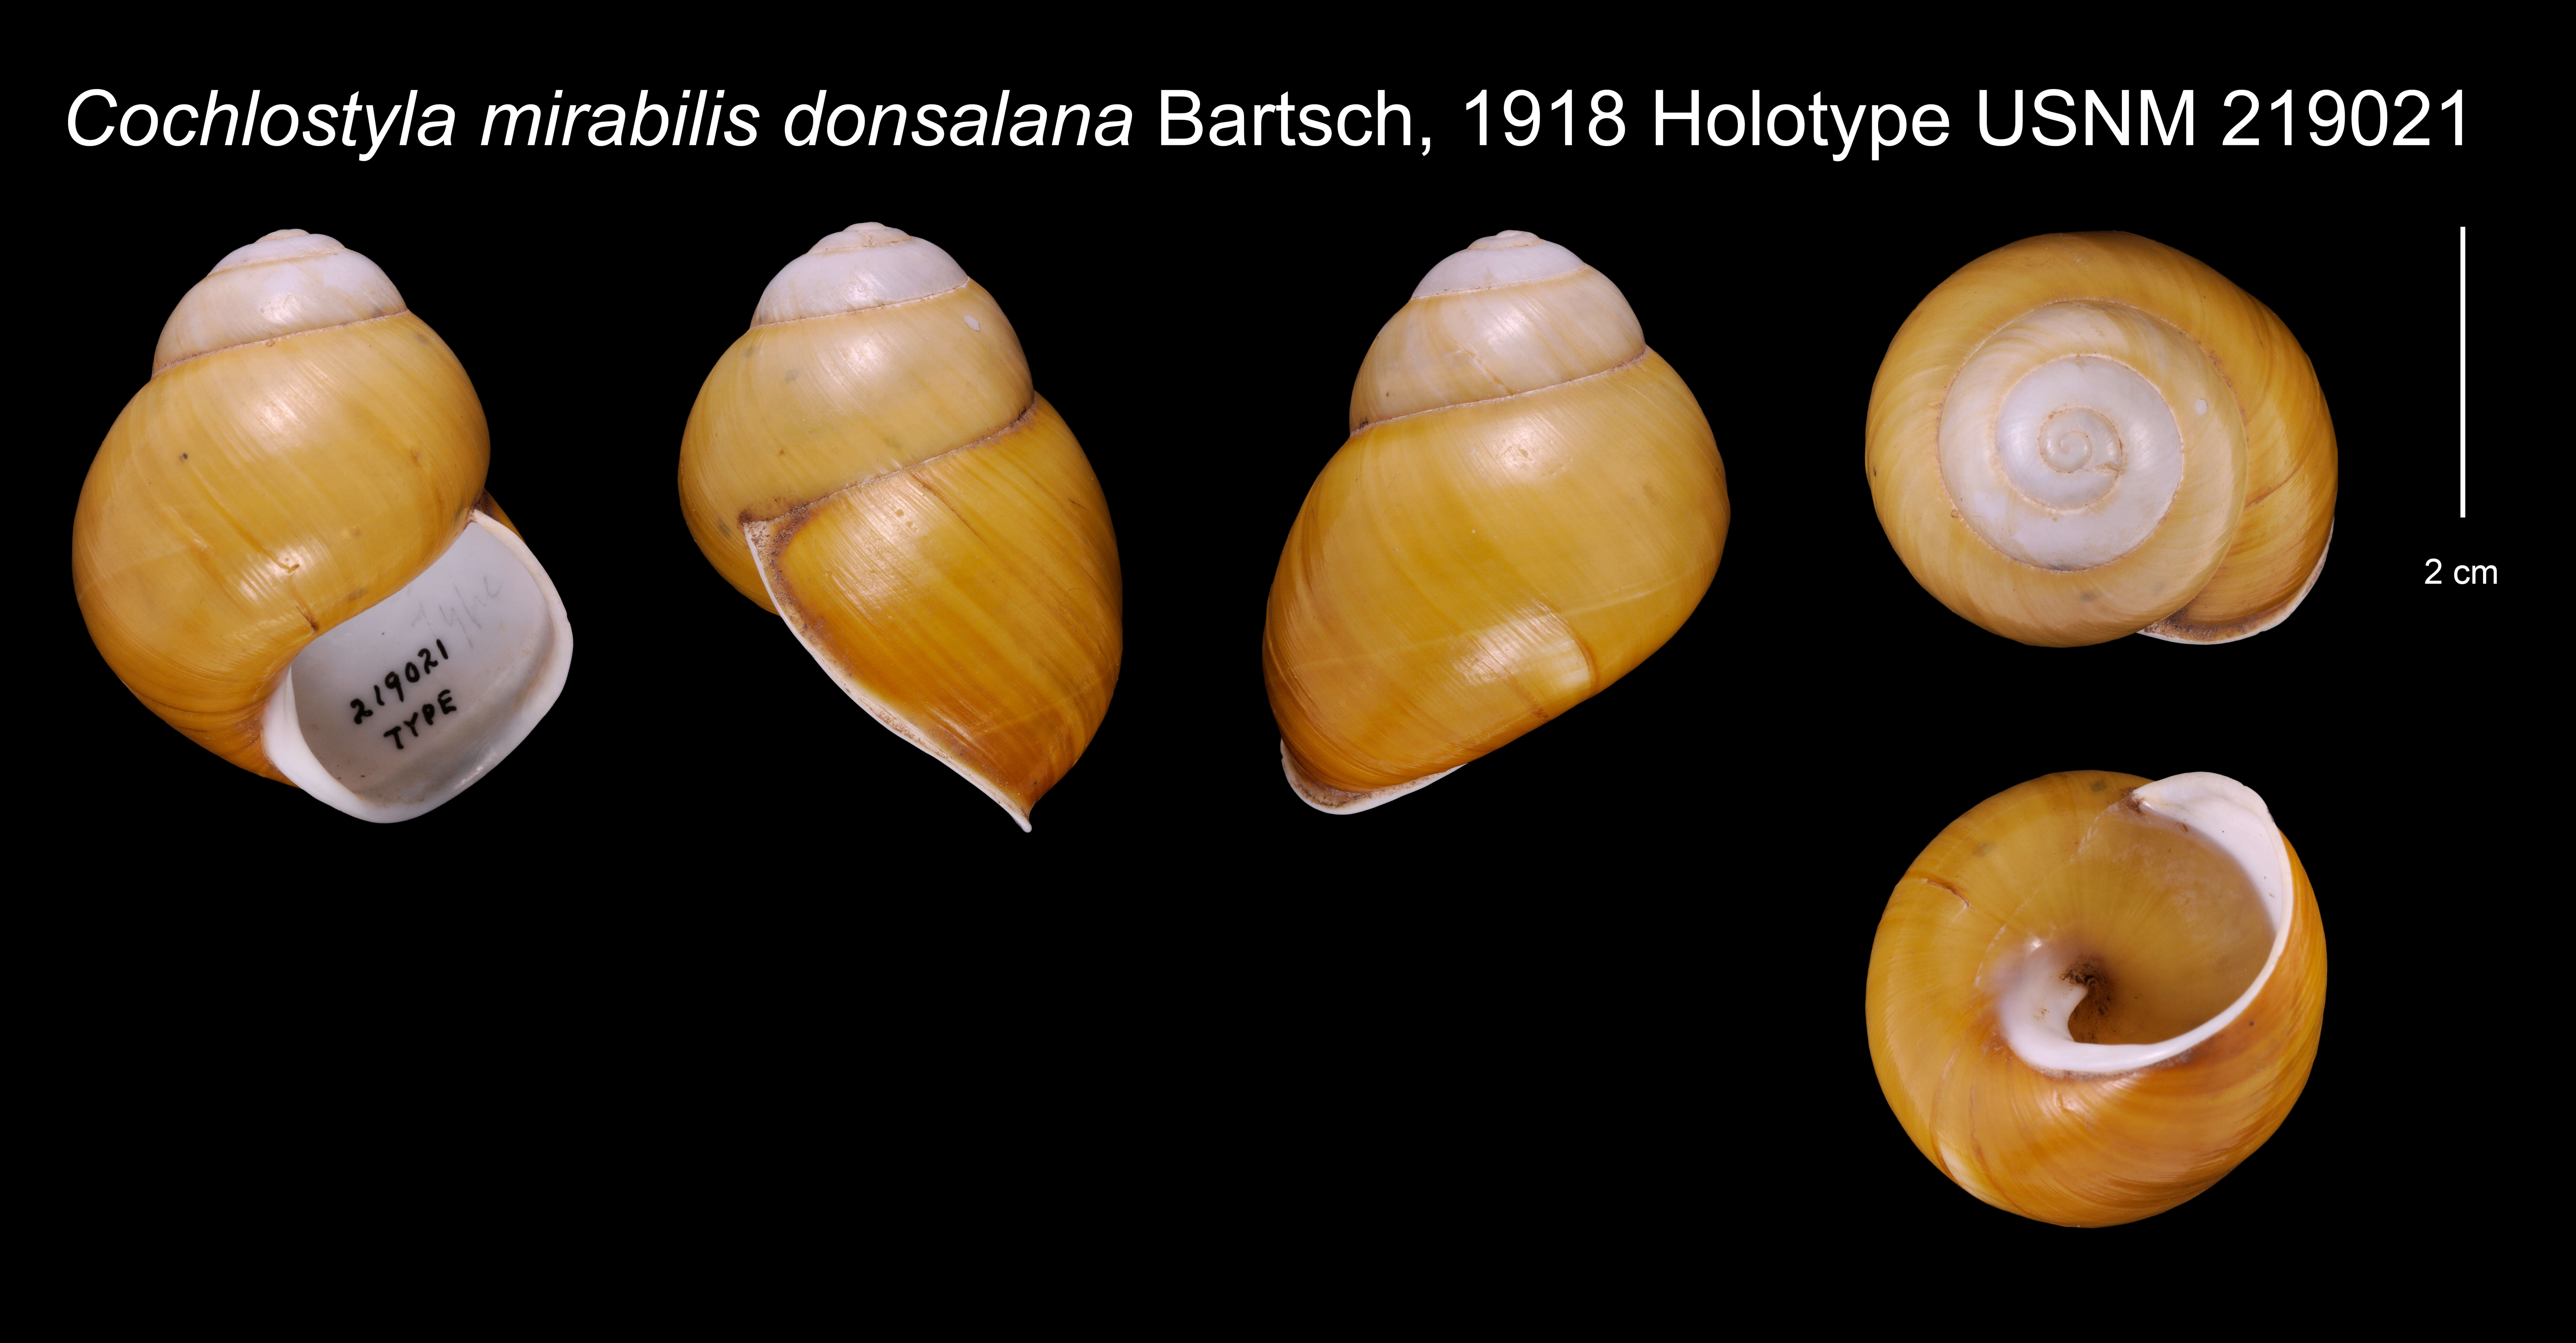 Image of Cochlostyla mirabilis donsalana Bartsch